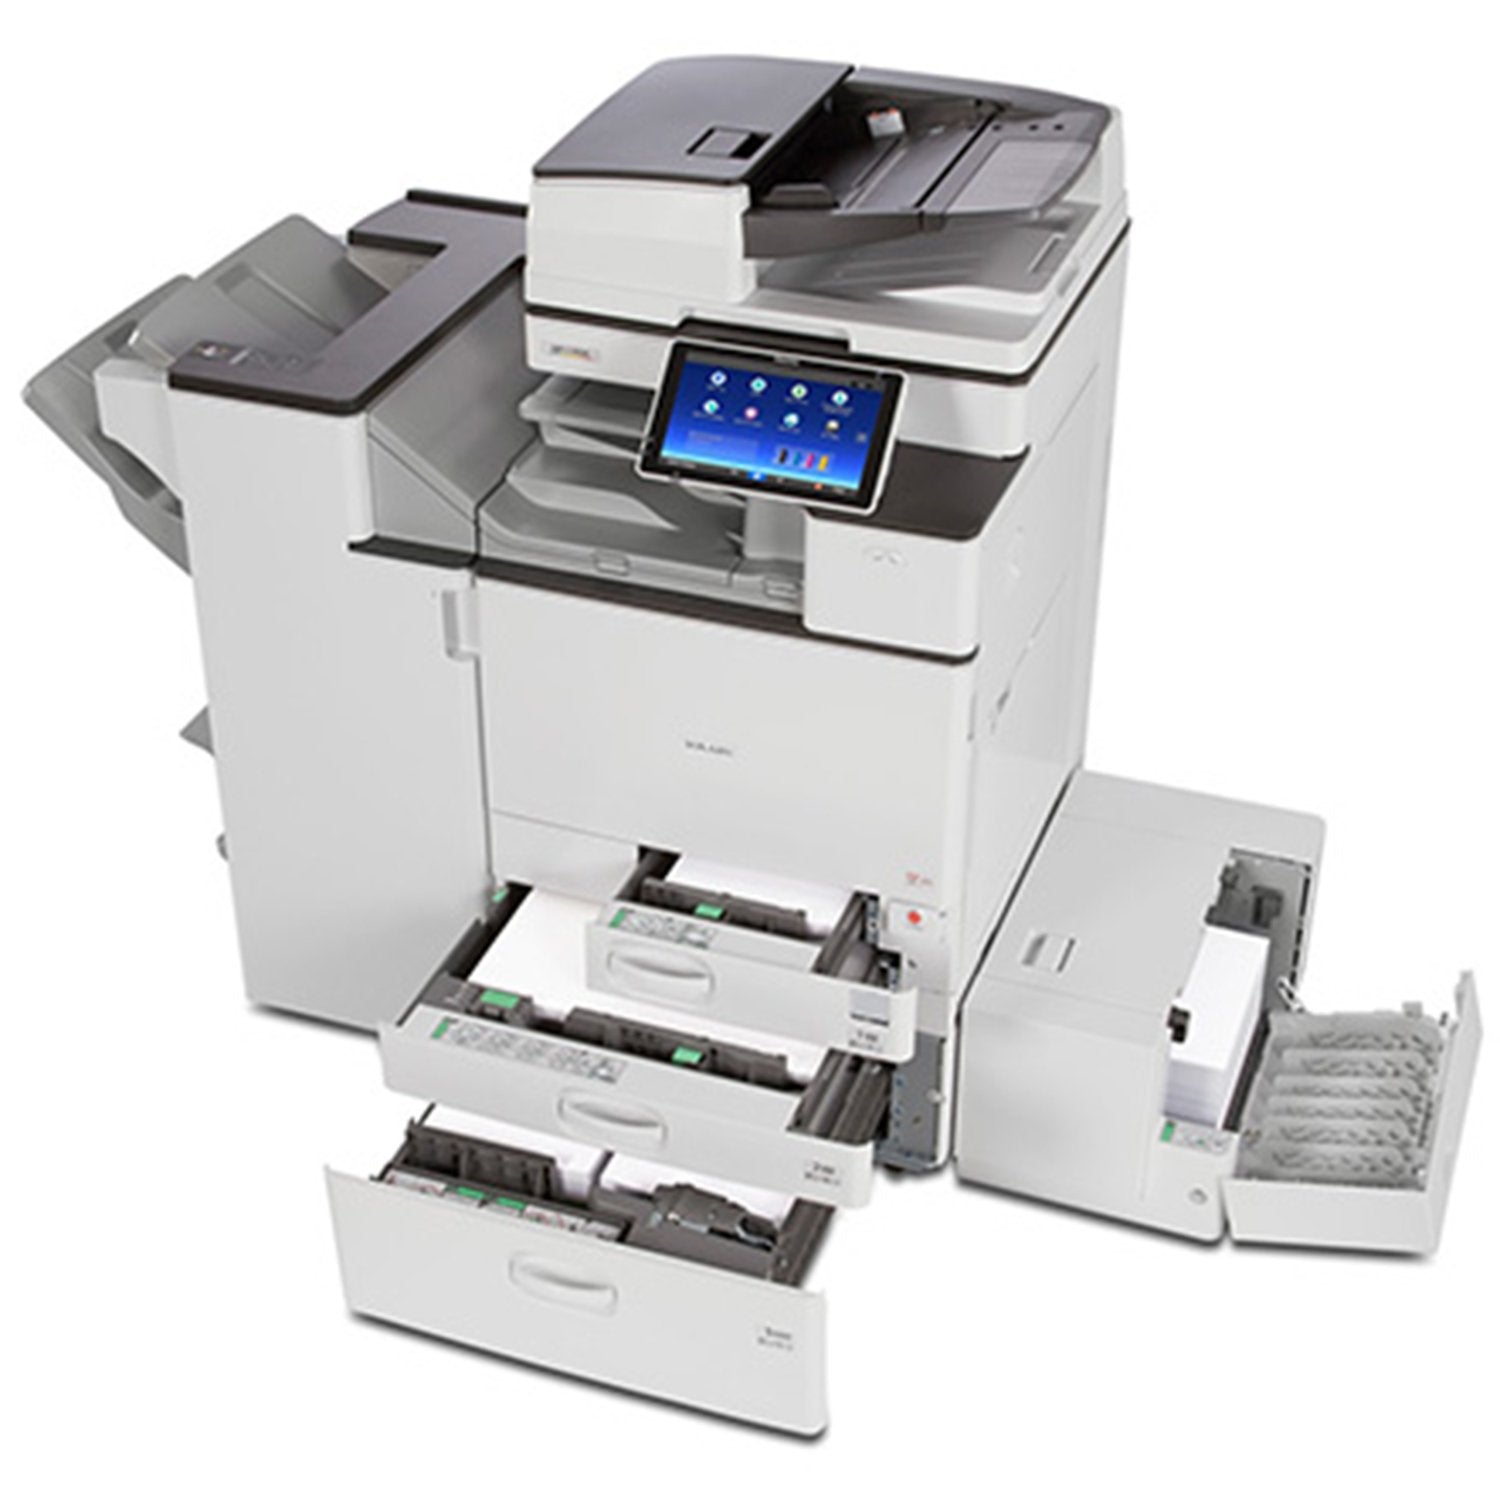 Absolute Toner $79/Month Ricoh MP C4504 Color Laser Multifunction Printer Copier Scanner 11X17, 12x18 For Office Showroom Color Copiers